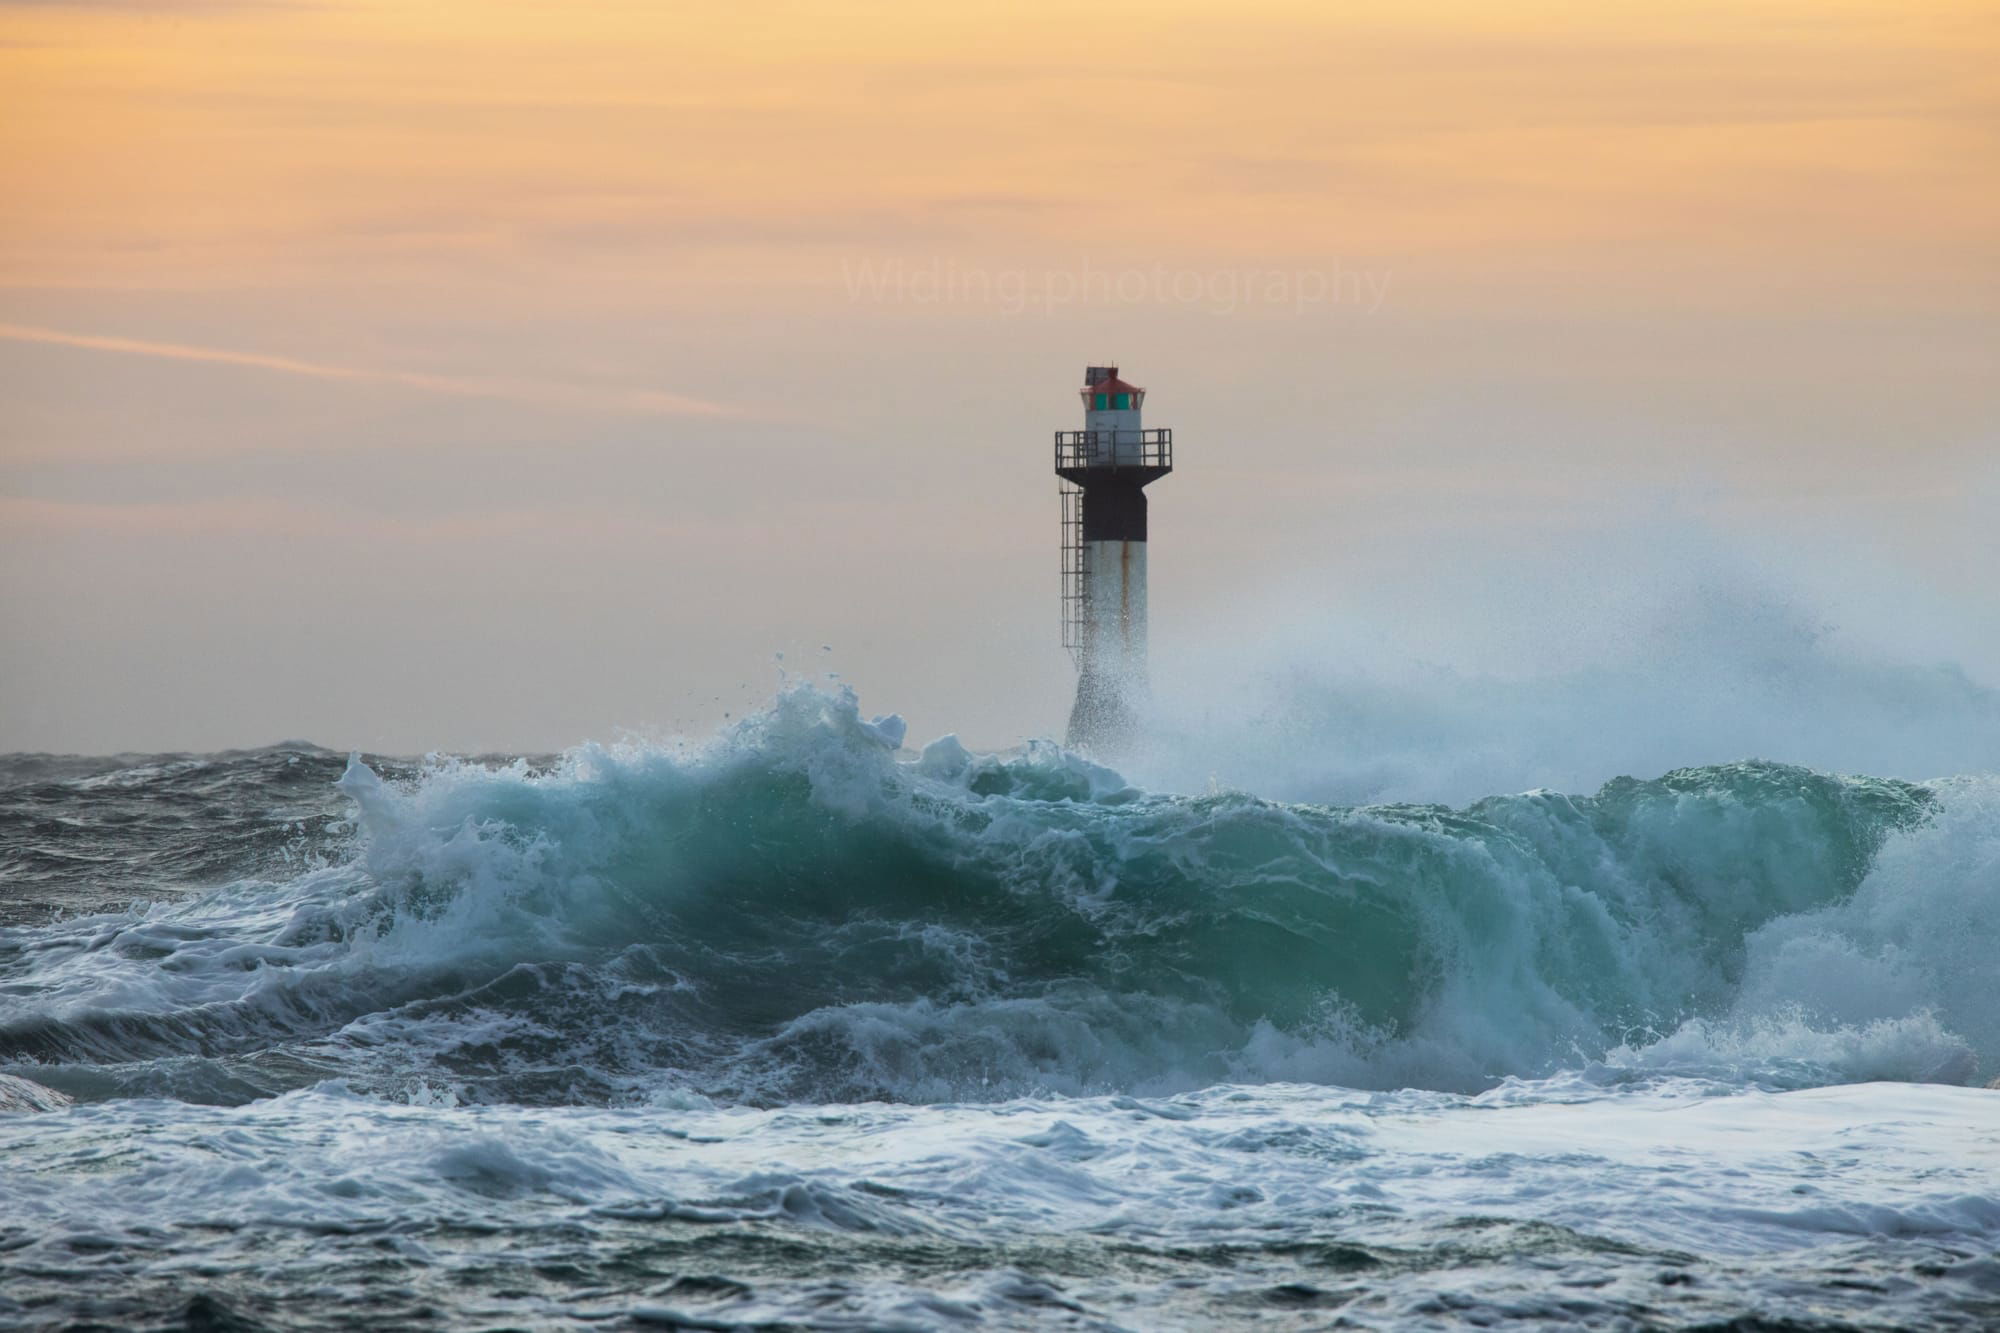 119. Impressive waves around the Lighthouse